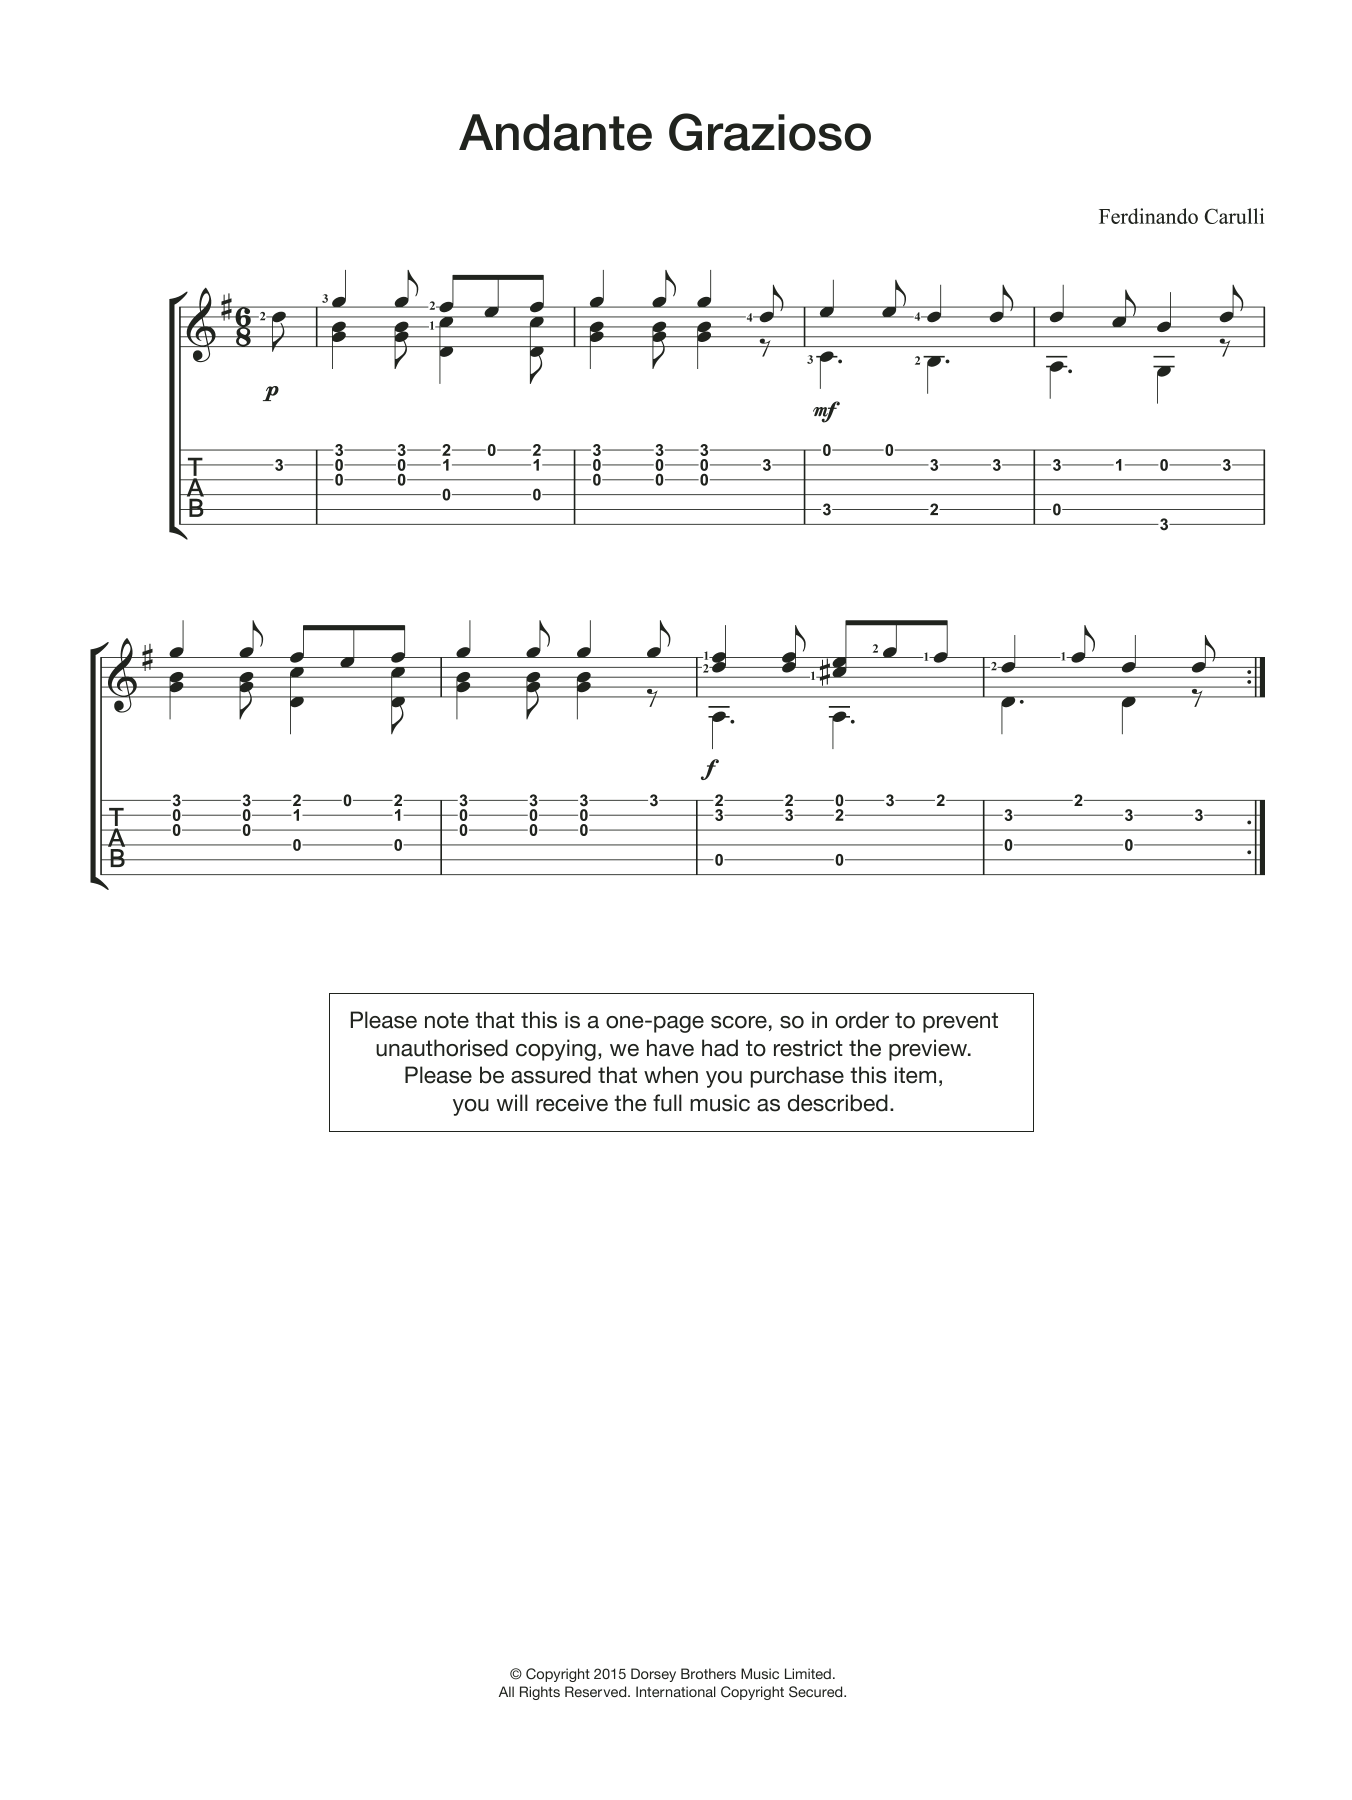 Ferdinando Carulli Andante Grazioso Sheet Music Notes & Chords for Guitar - Download or Print PDF